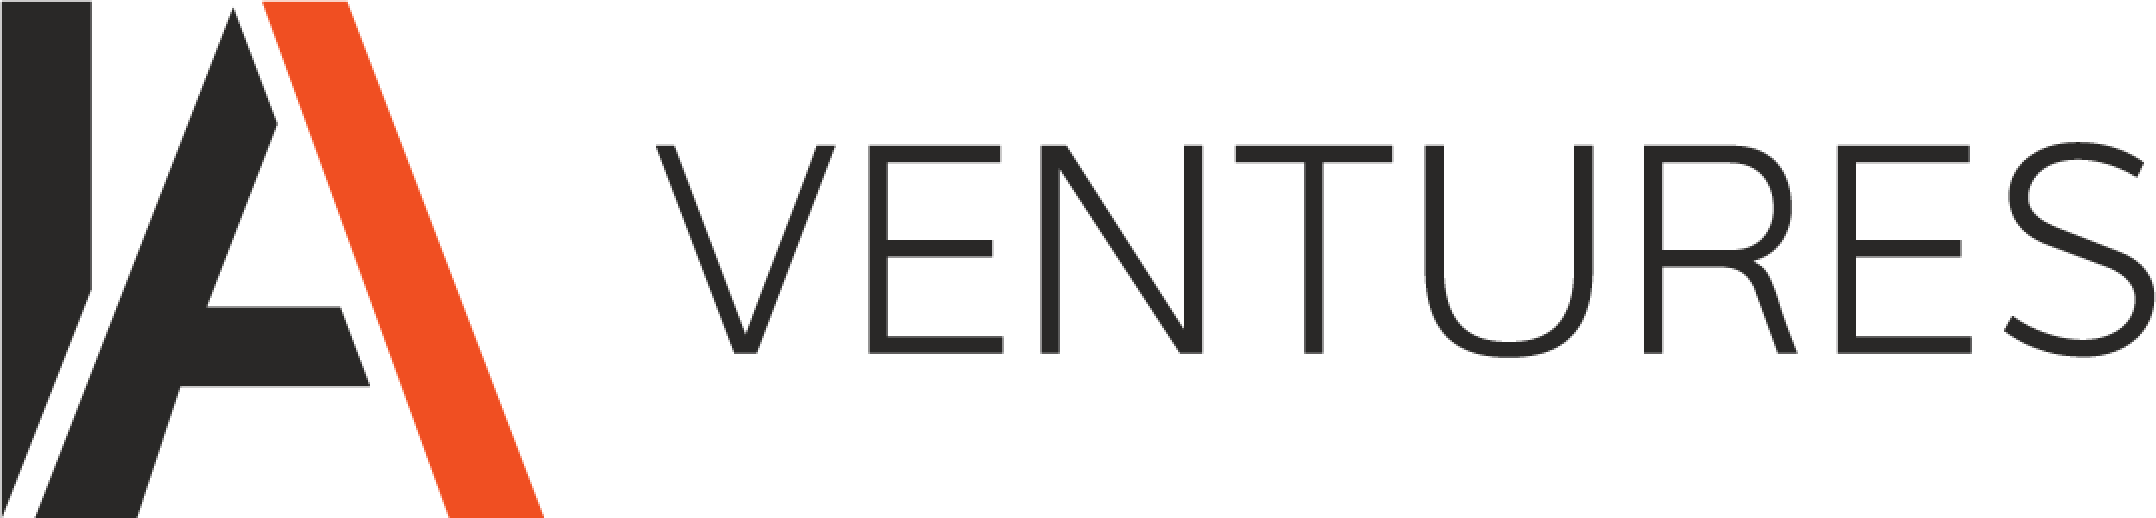 IA Ventures logo